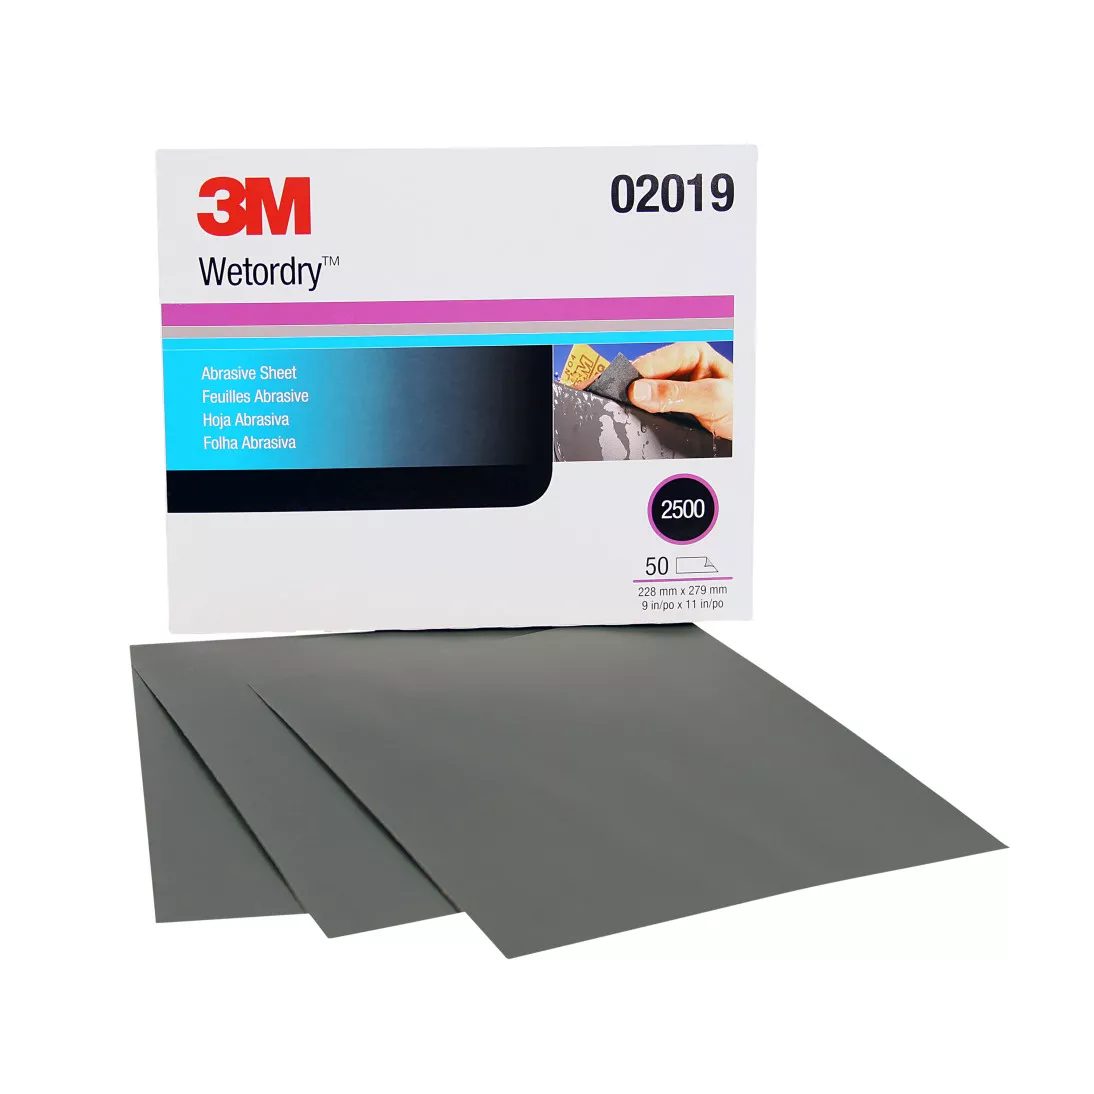 3M™ Wetrodry™ Abrasive Sheet, 02019, 2500, 9 in x 11 in, 50 sheets per
carton, 5 cartons per case